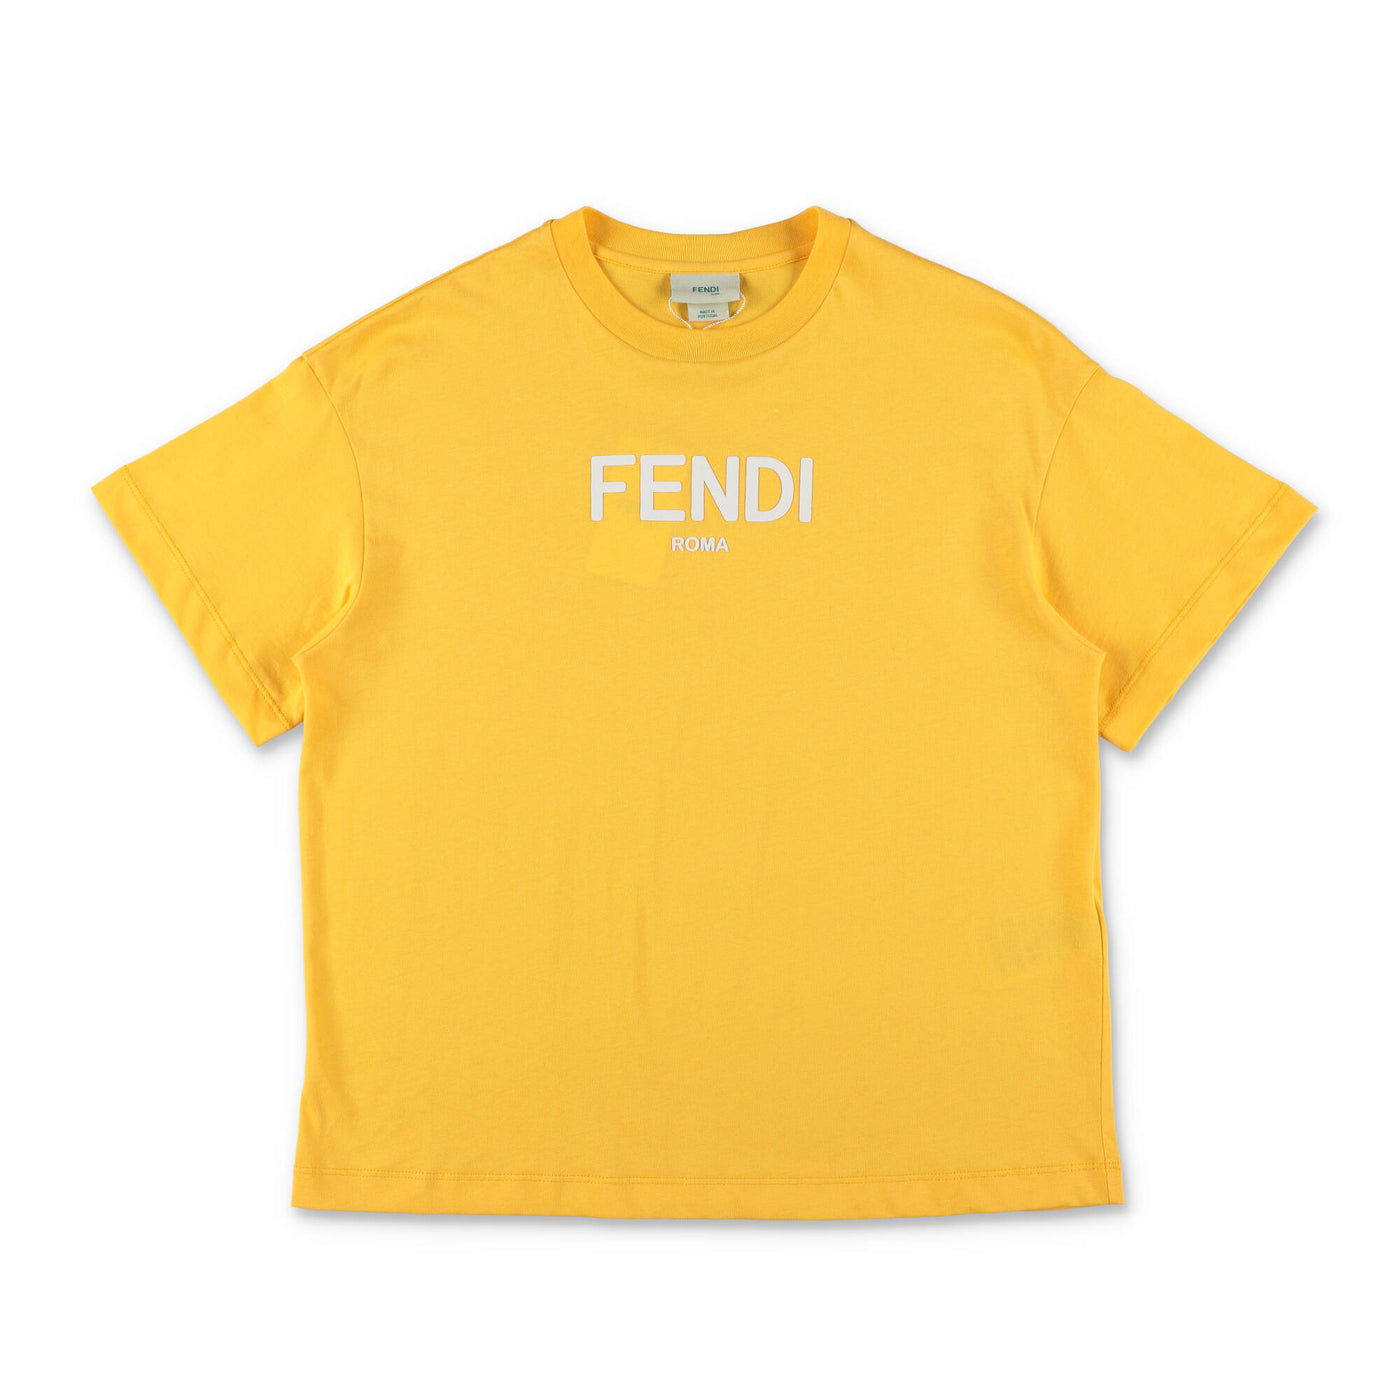 Yellow cotton jersey boy FENDI t-shirt - Carofiglio Junior